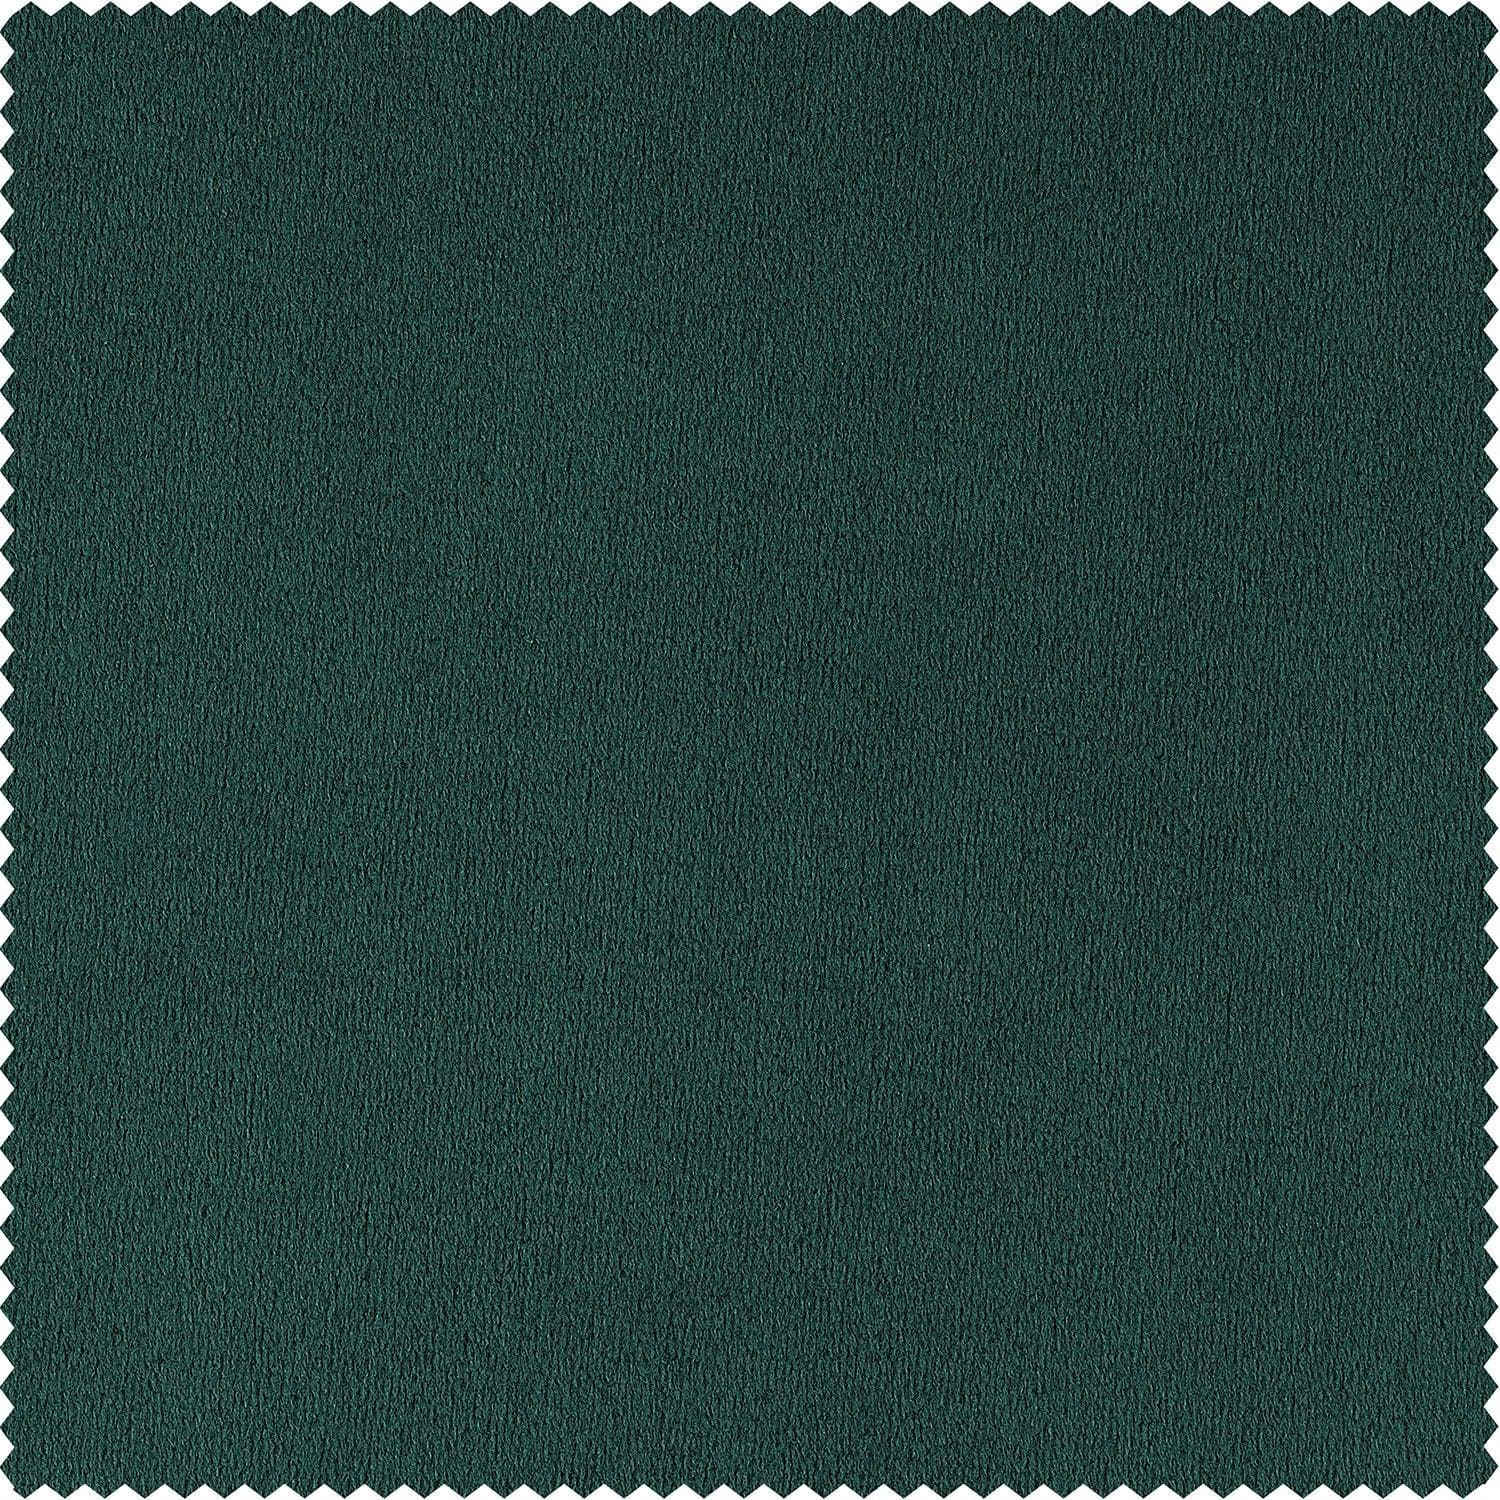 Blackforest Green Signature Velvet Custom Curtain